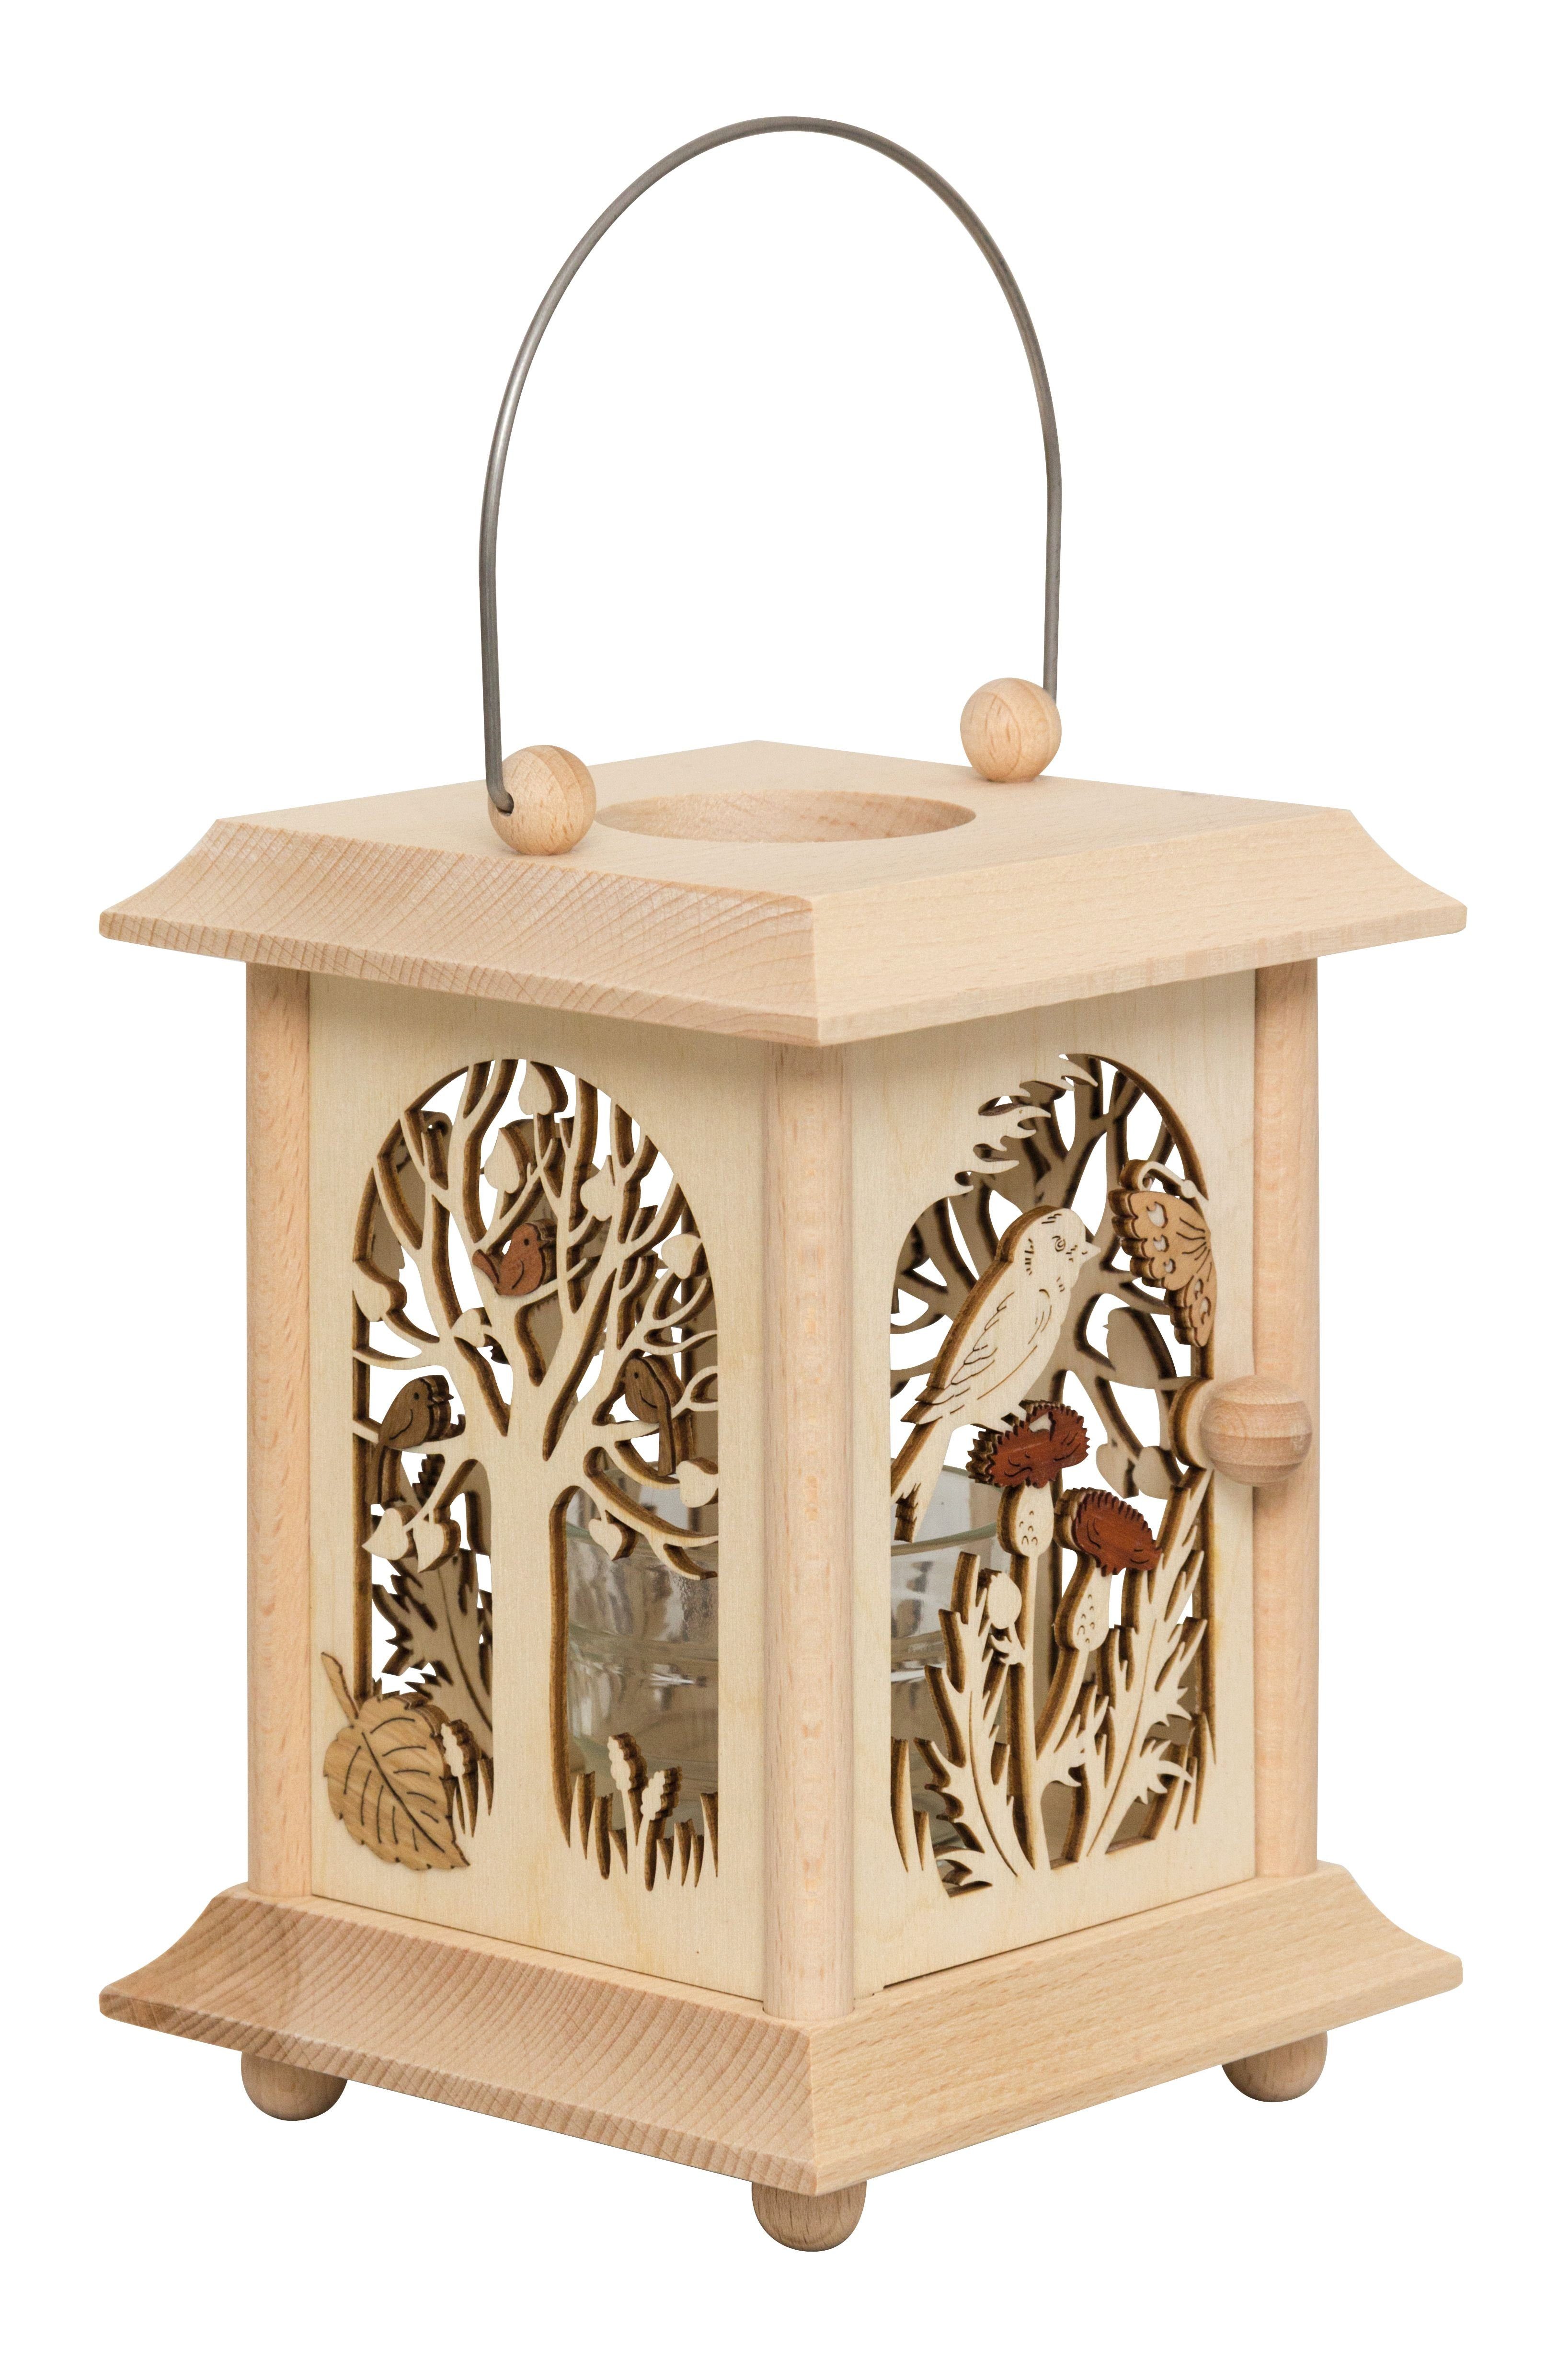 Kuhnert Tischlaterne 27053, Baum-Motiv, Holz, aus Made Kerzenlaterne hochwertige in Germany